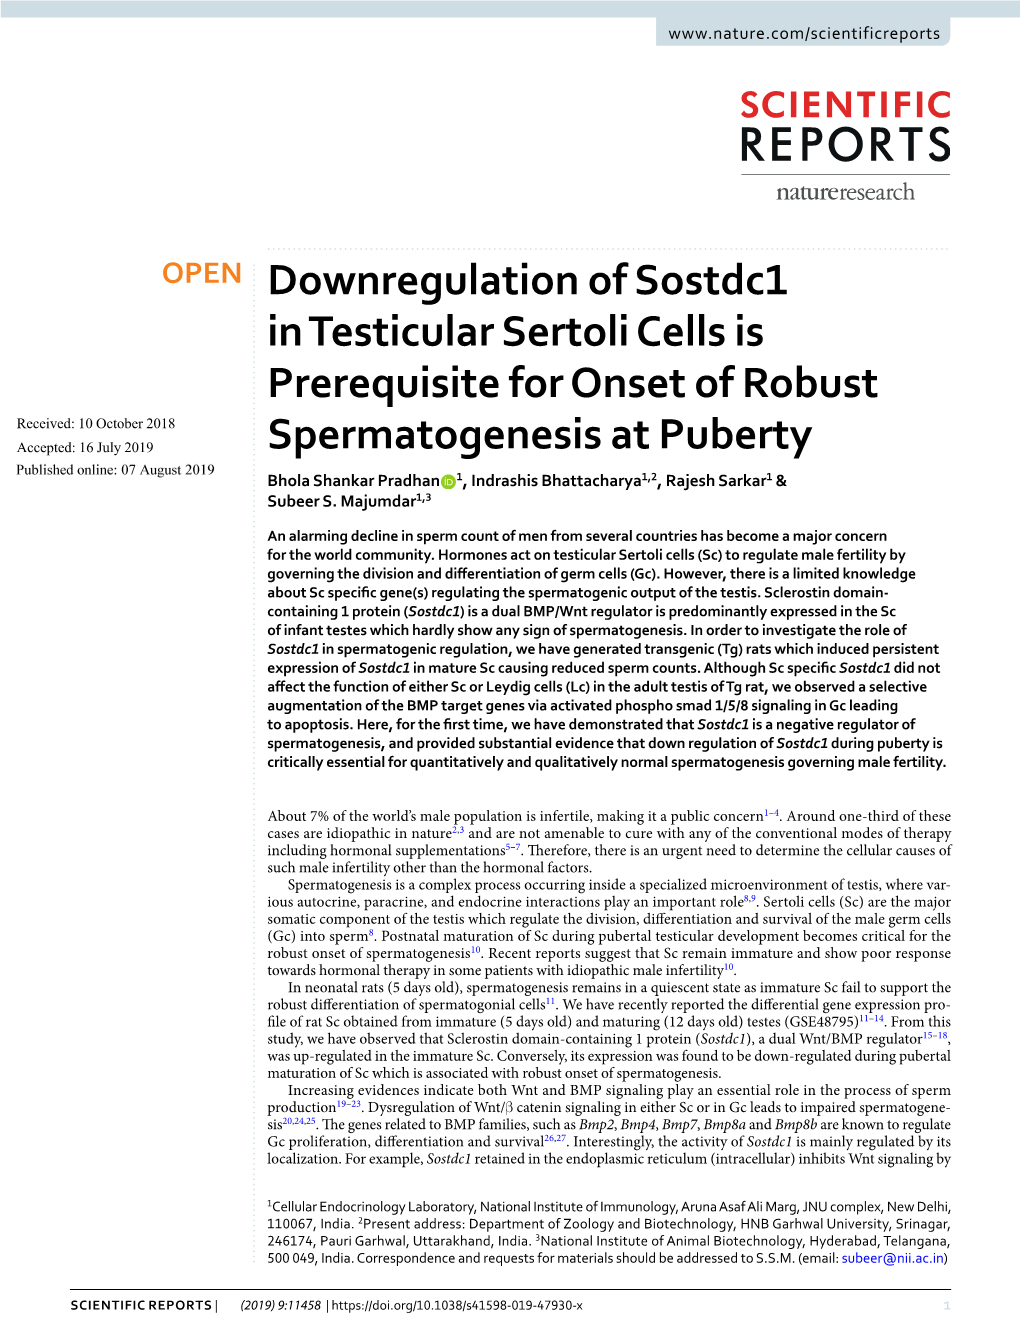 Downregulation of Sostdc1 in Testicular Sertoli Cells Is